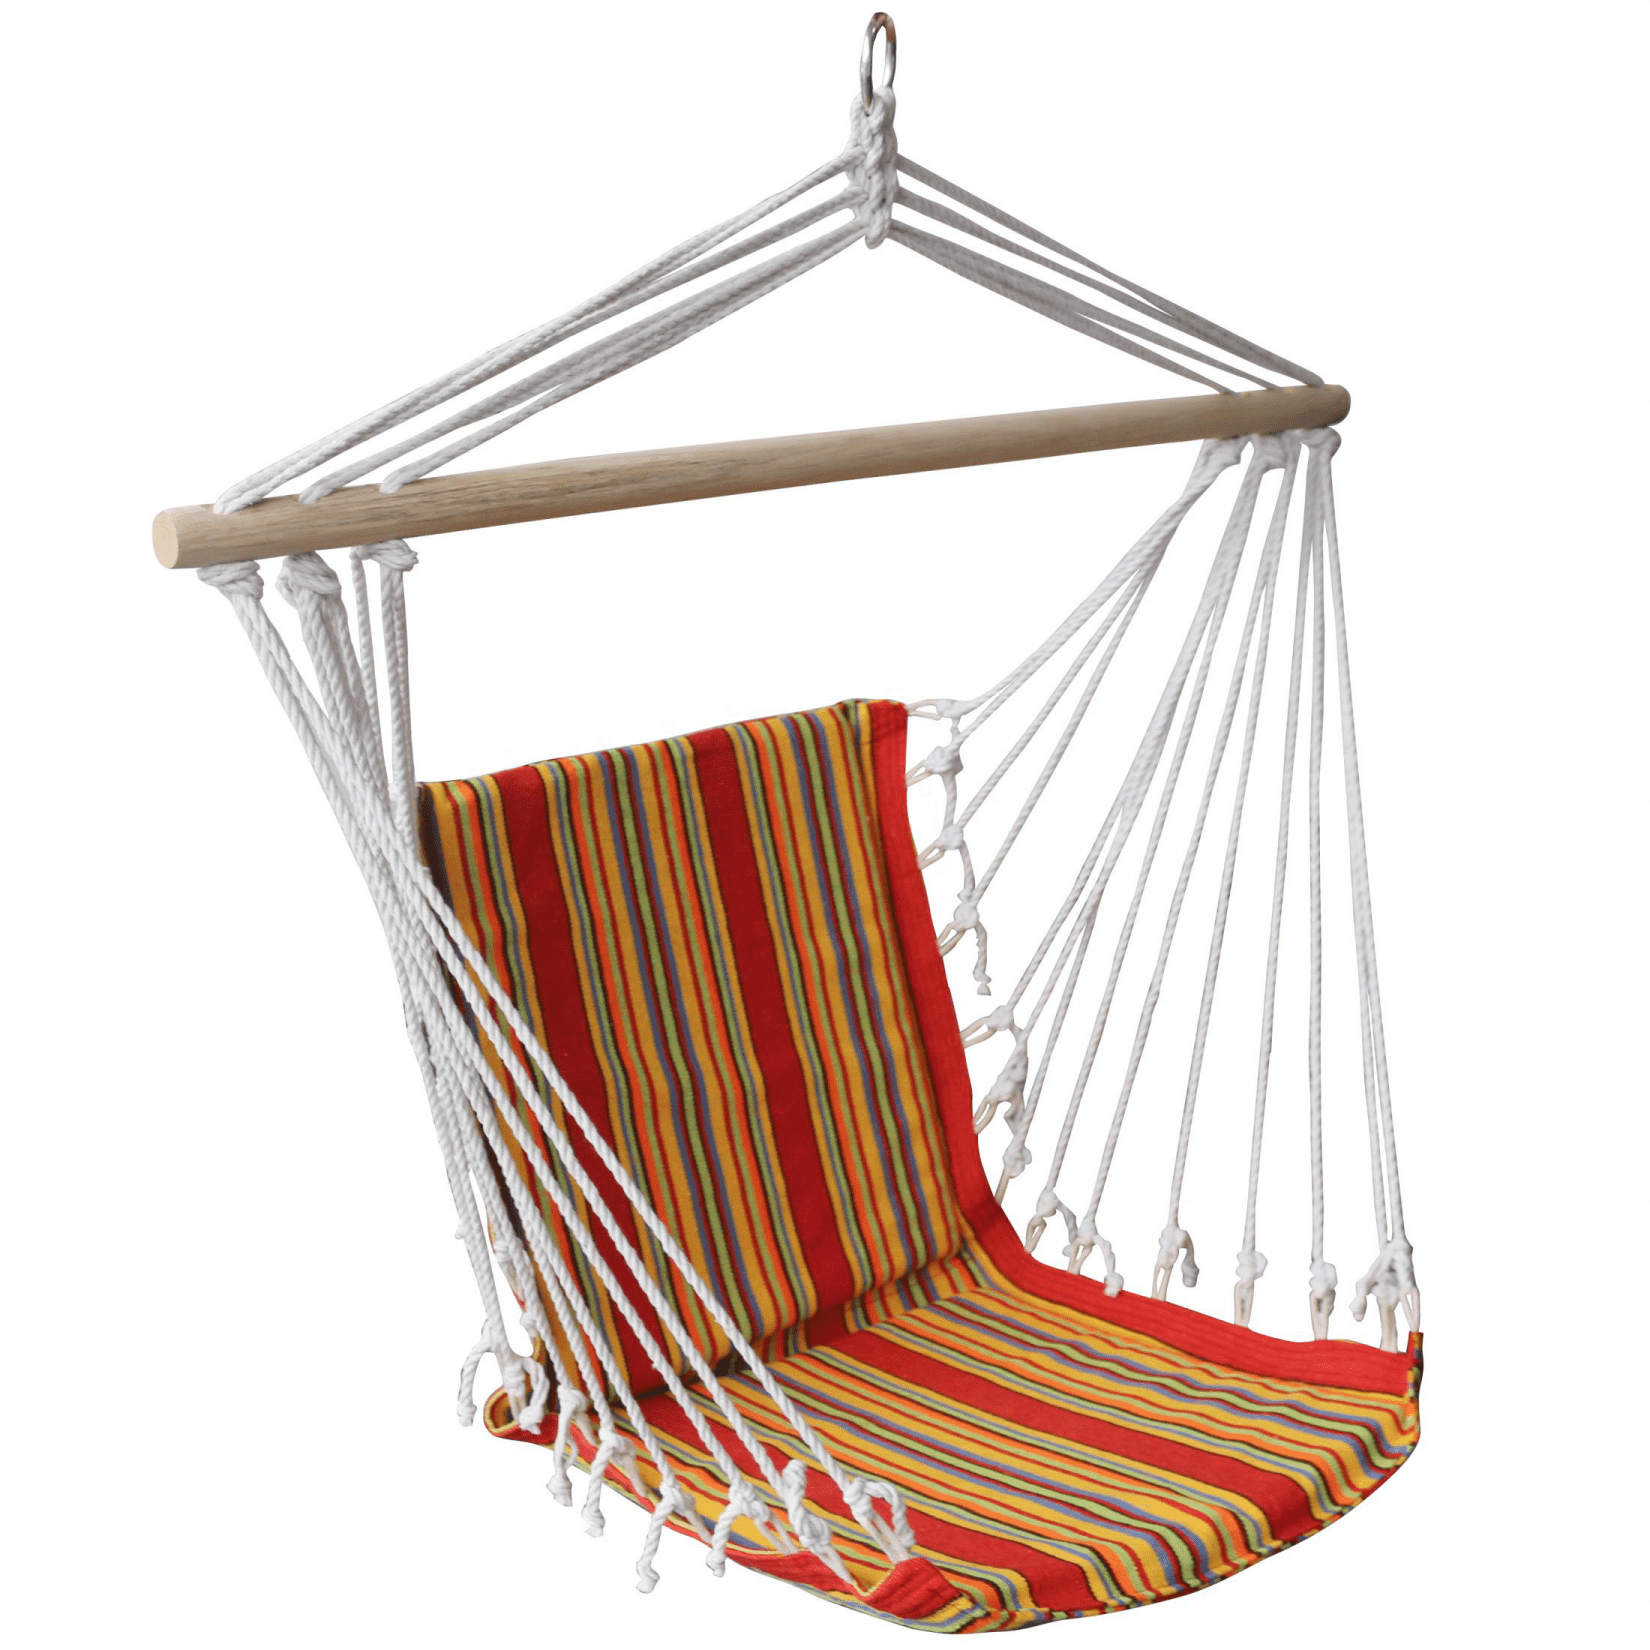 Pol.ycotton hammock chair with woodbar